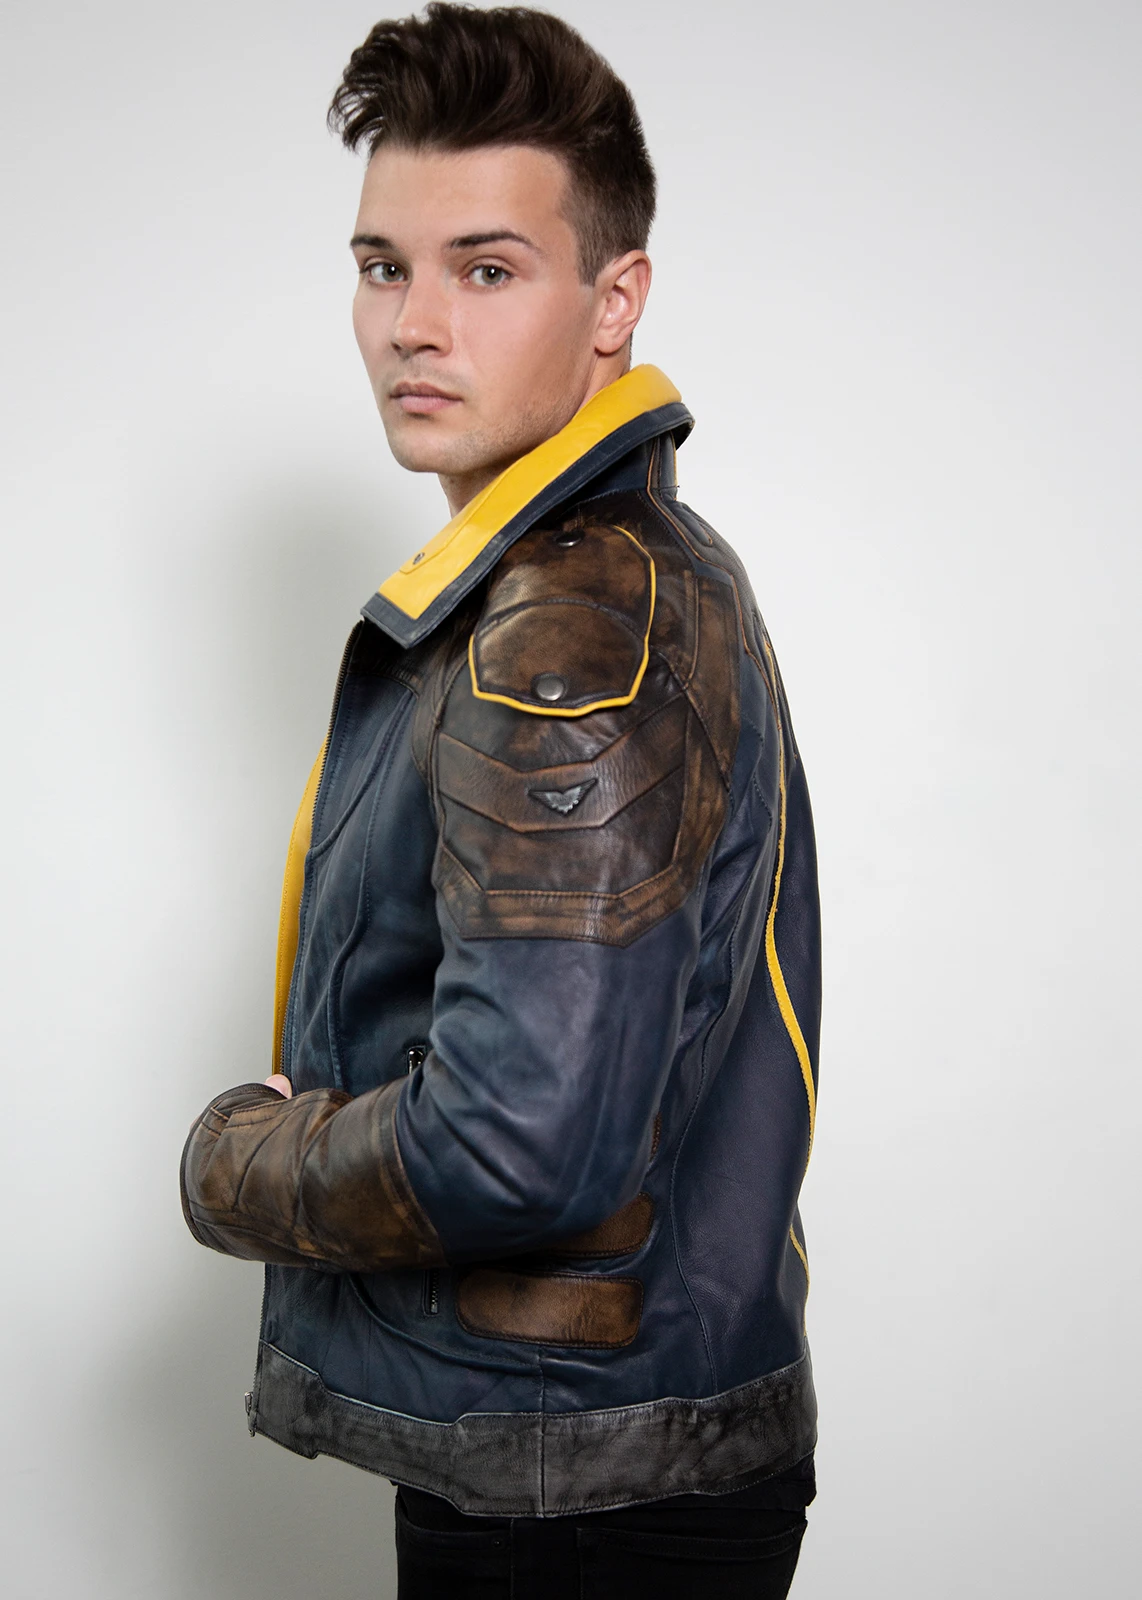 BL3 Zane Blue & Yellow Leather Jackets Vault Hunter